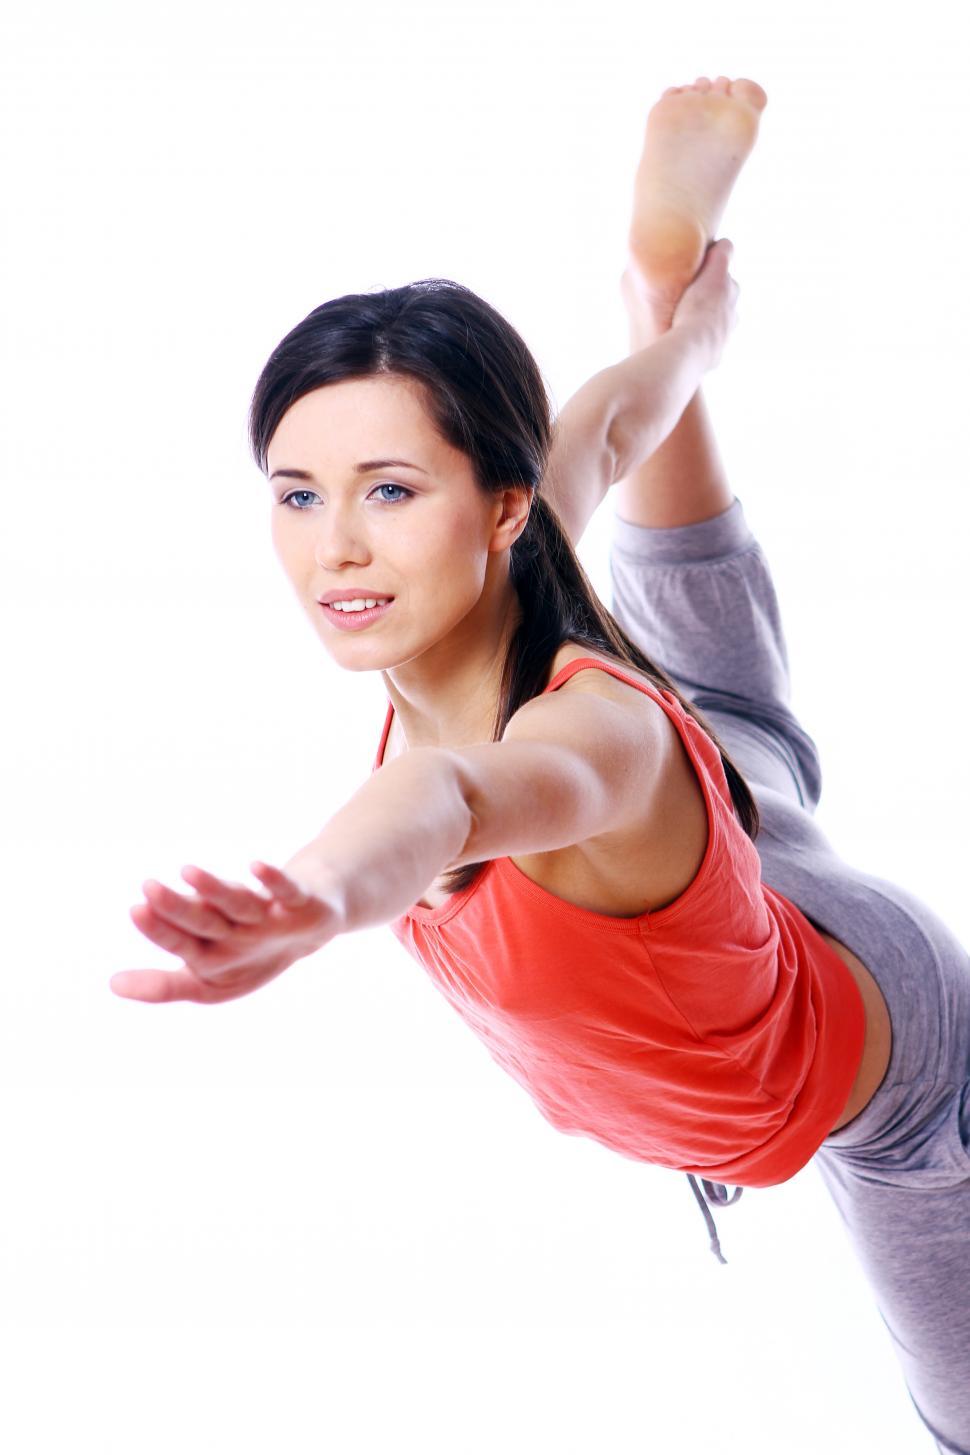 https://freerangestock.com/sample/138553/fit-woman-girl-doing-yoga-exercises.jpg